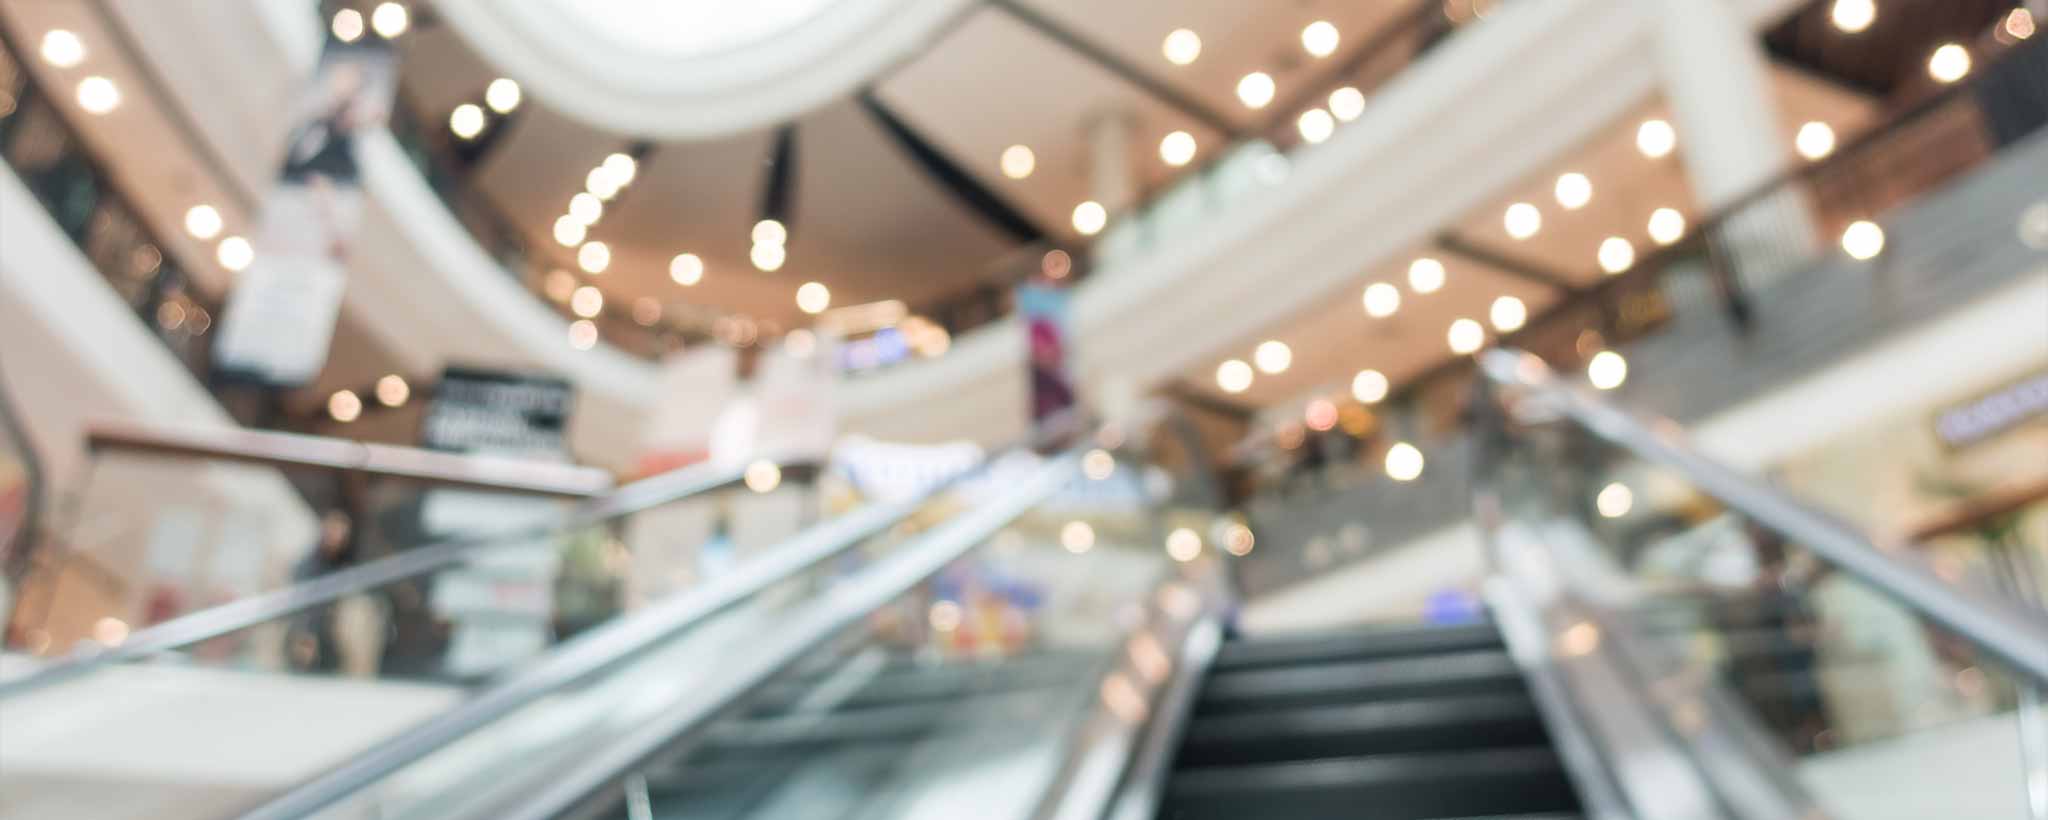 'Shopping mall escalators'